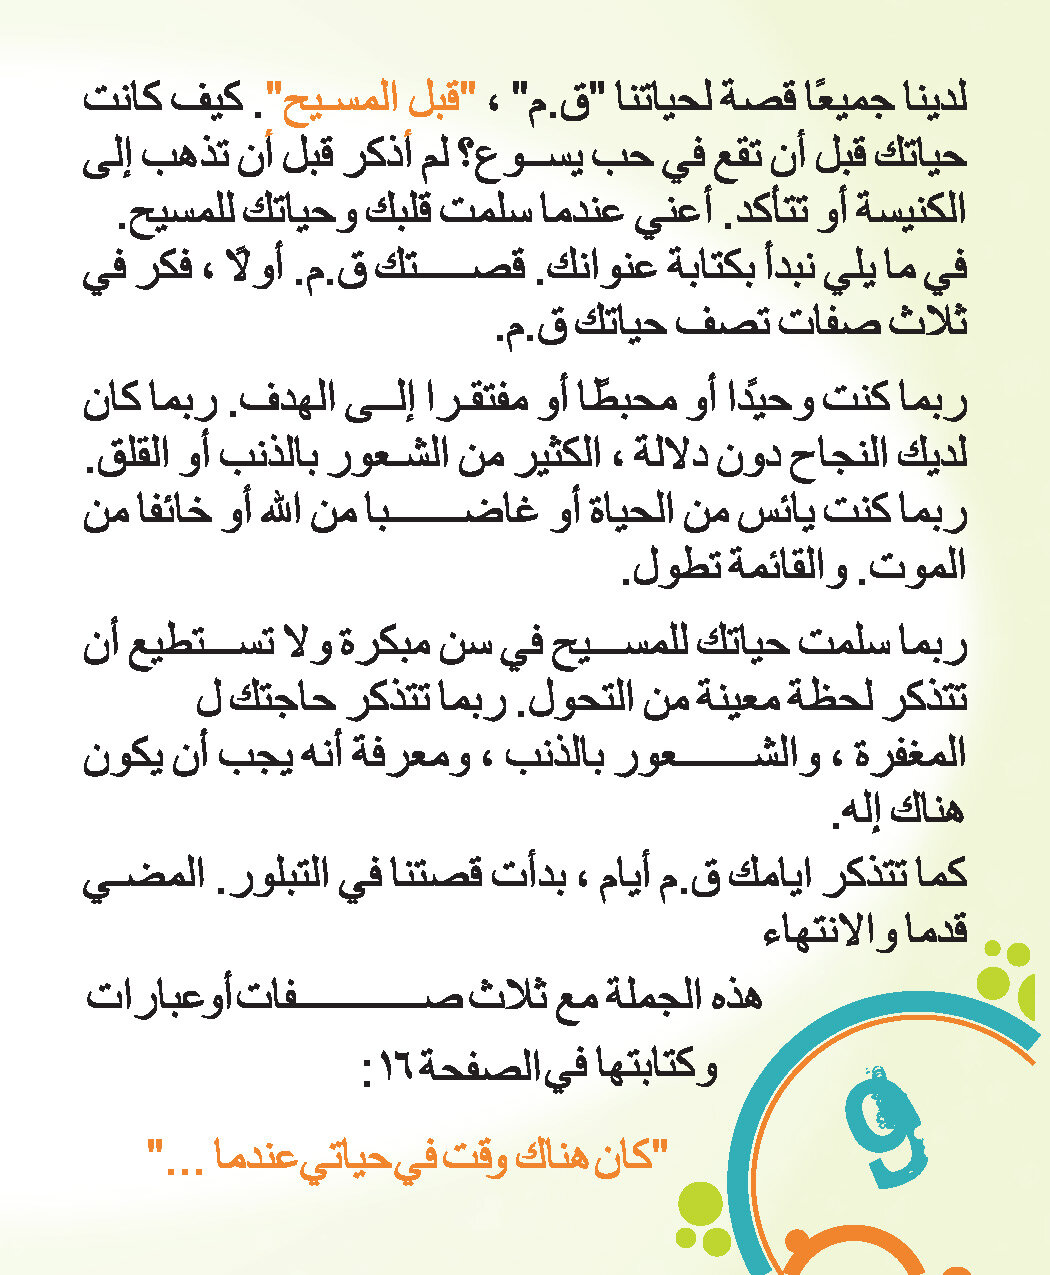 Arabic_Zubi_CDR-based_Page_09.jpg